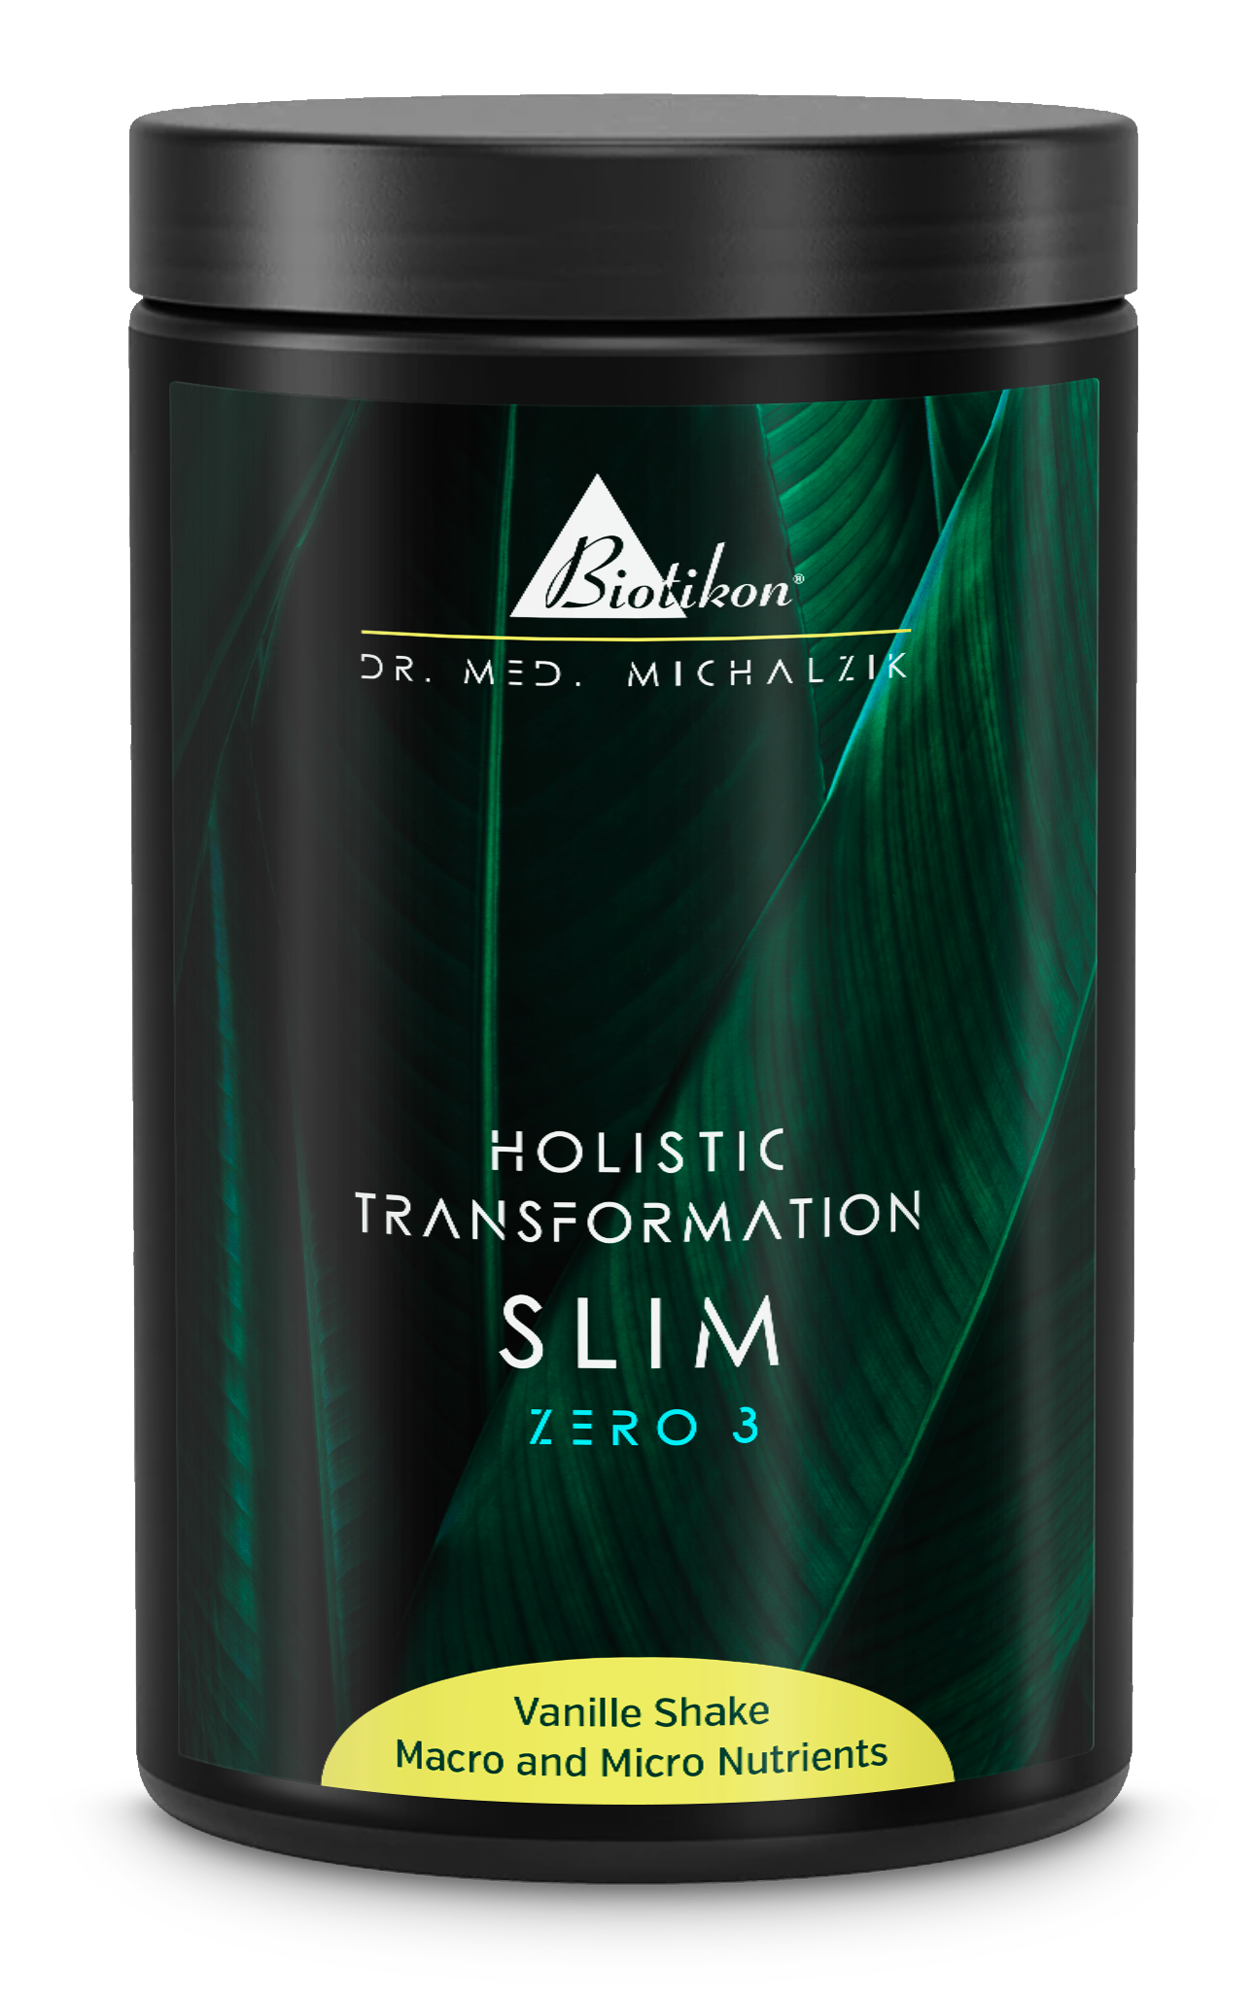 Holistic Transformation Slim Zero 3